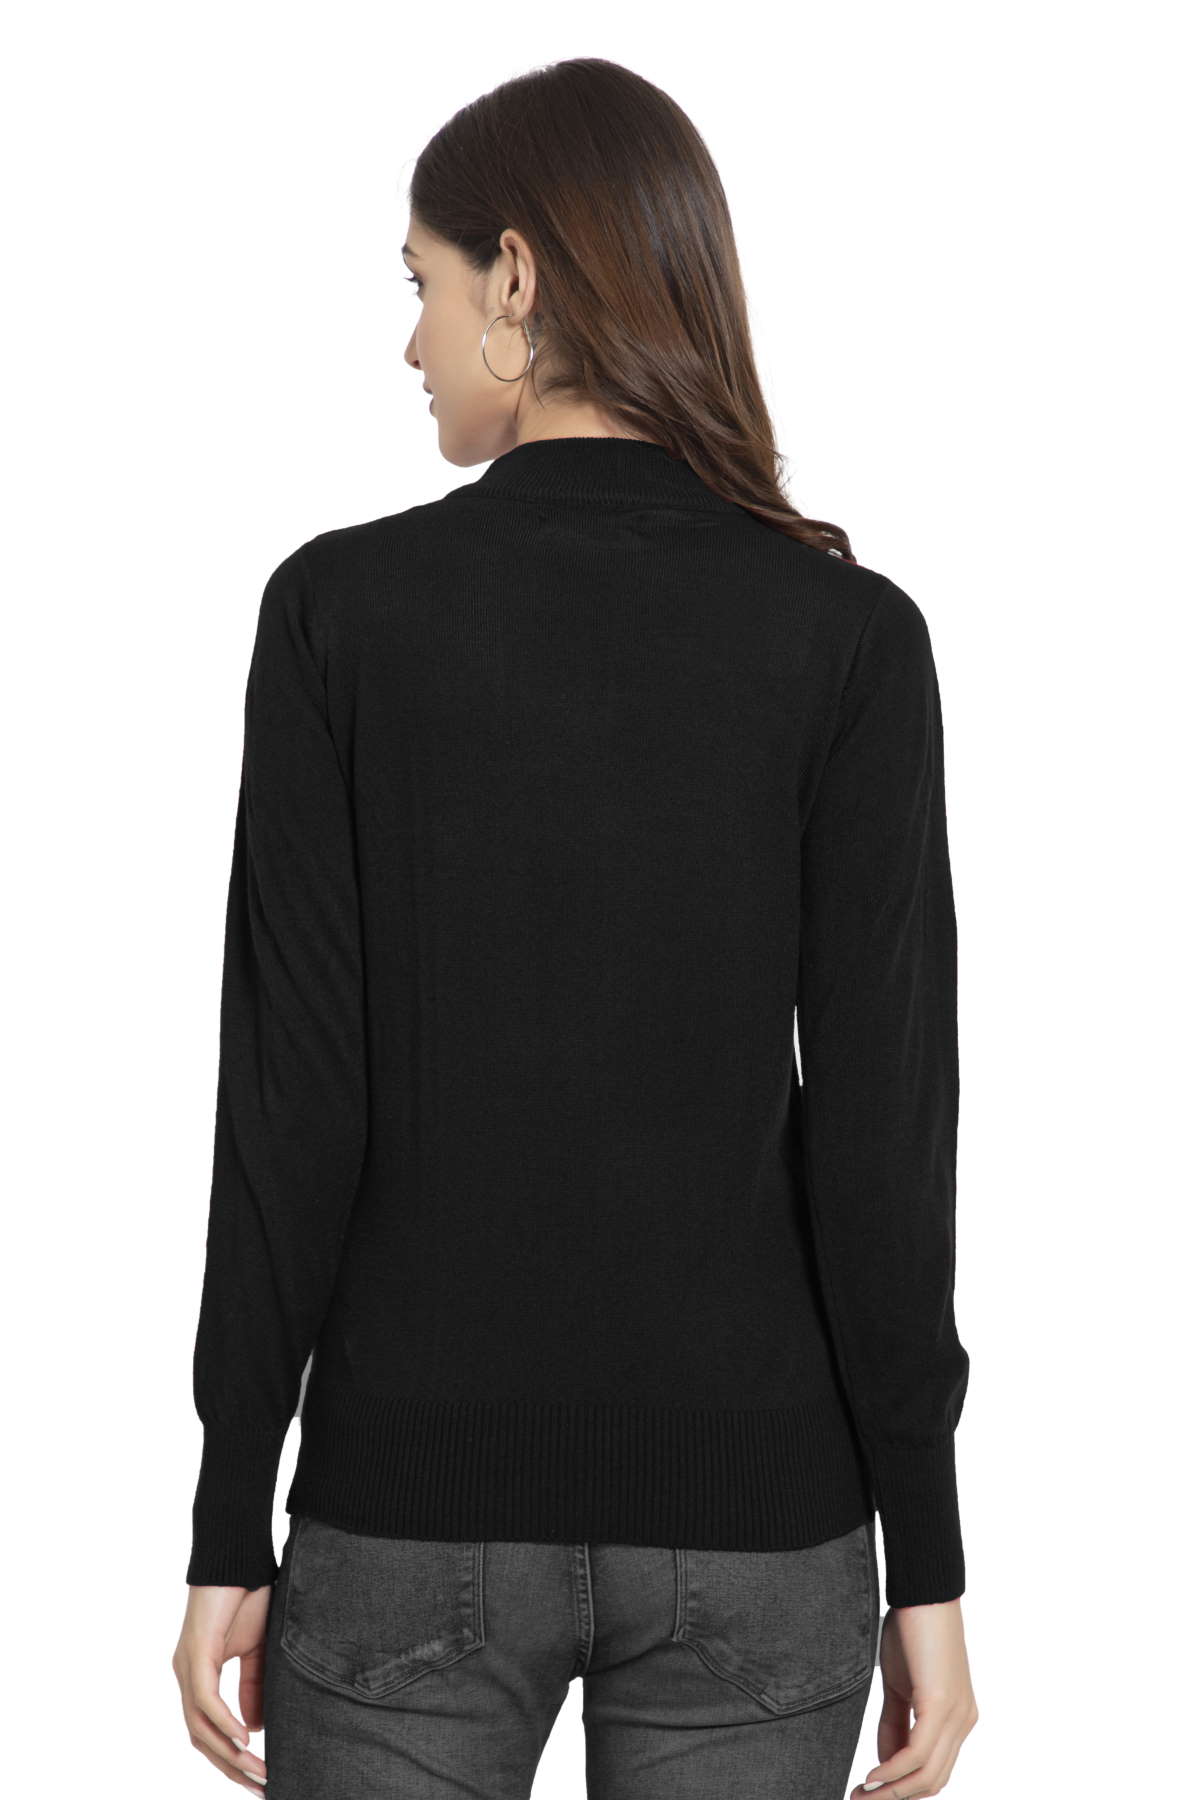 Black Full Sleeve Woolen Turtle Neck Sweater For Women - GODFREY